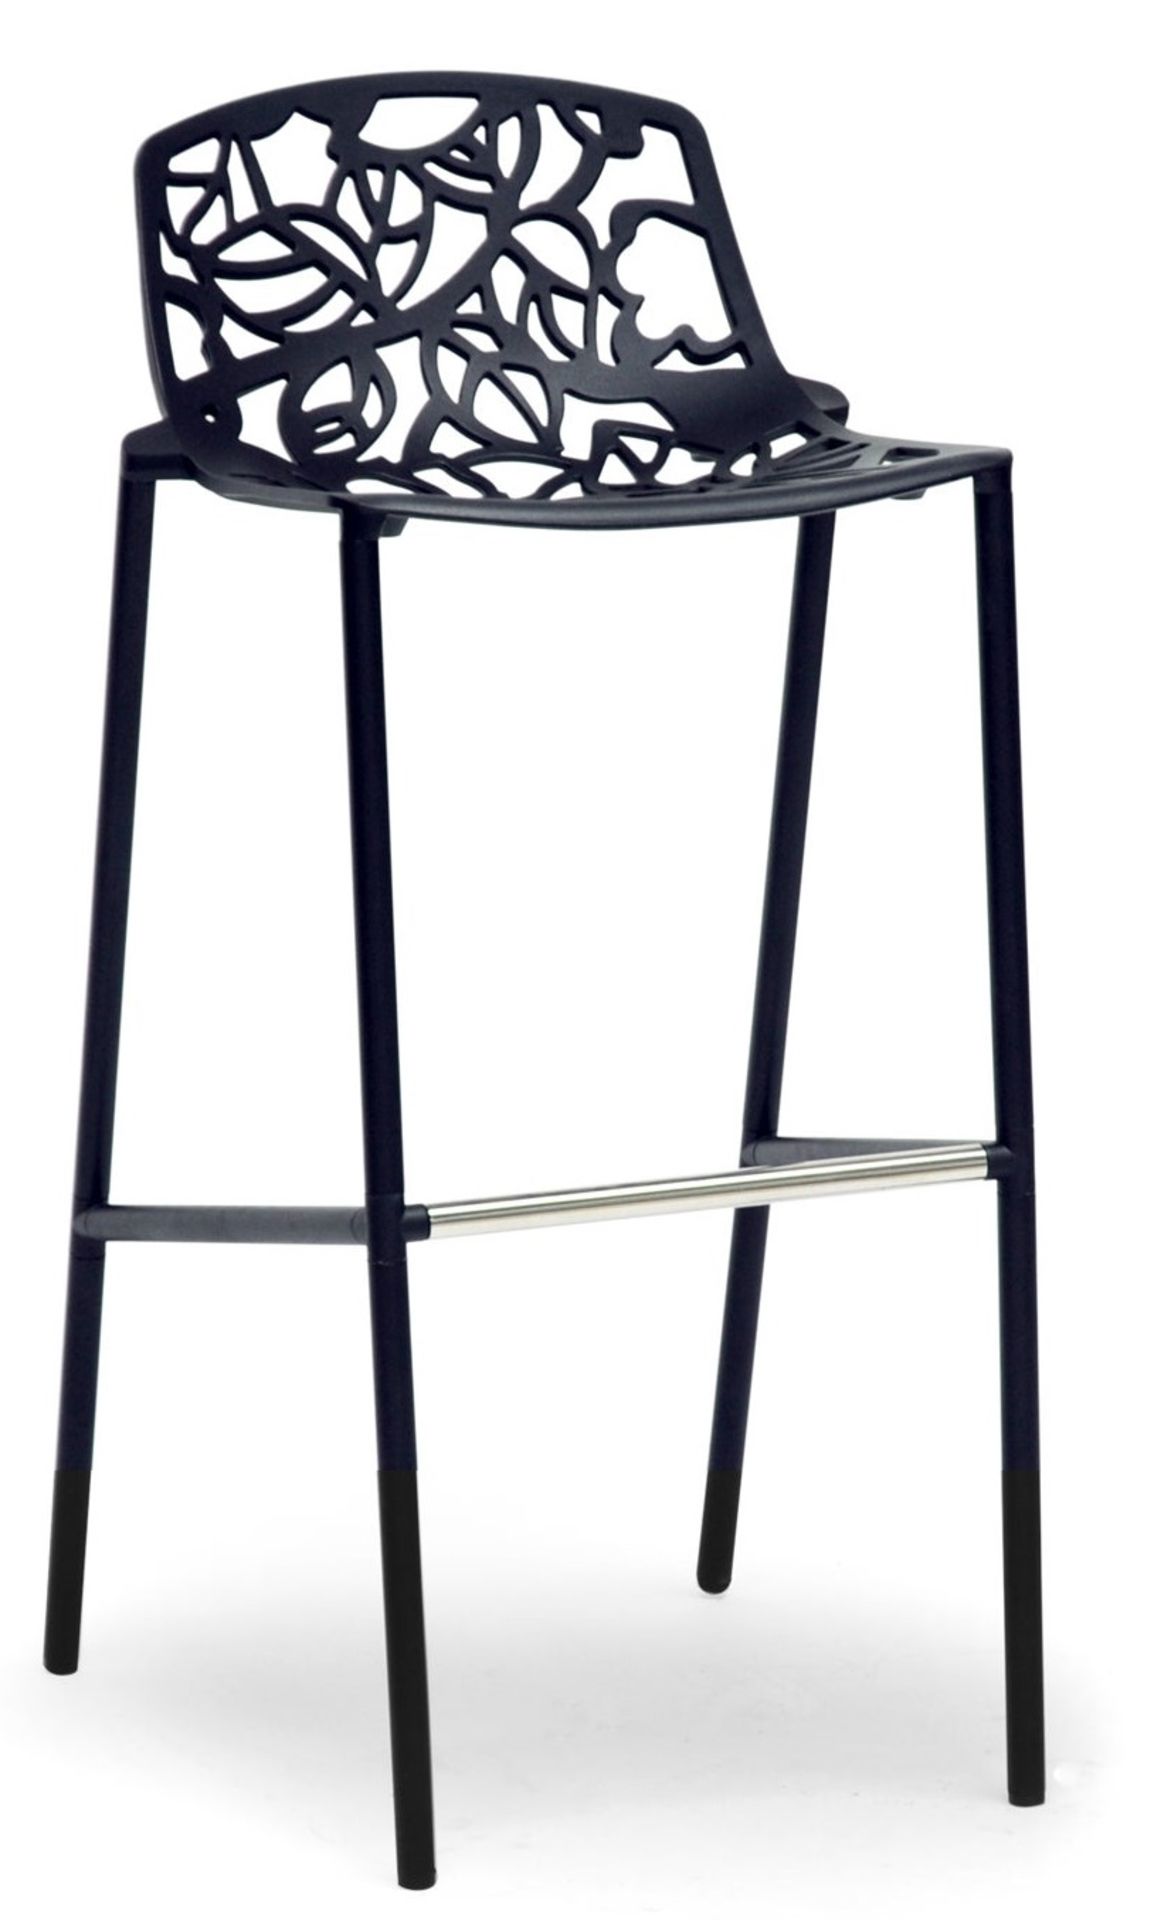 1 x Metal Modern Designer Bar Stool With A Floral Filigree Design - Original RRP £166.00 - Brand New